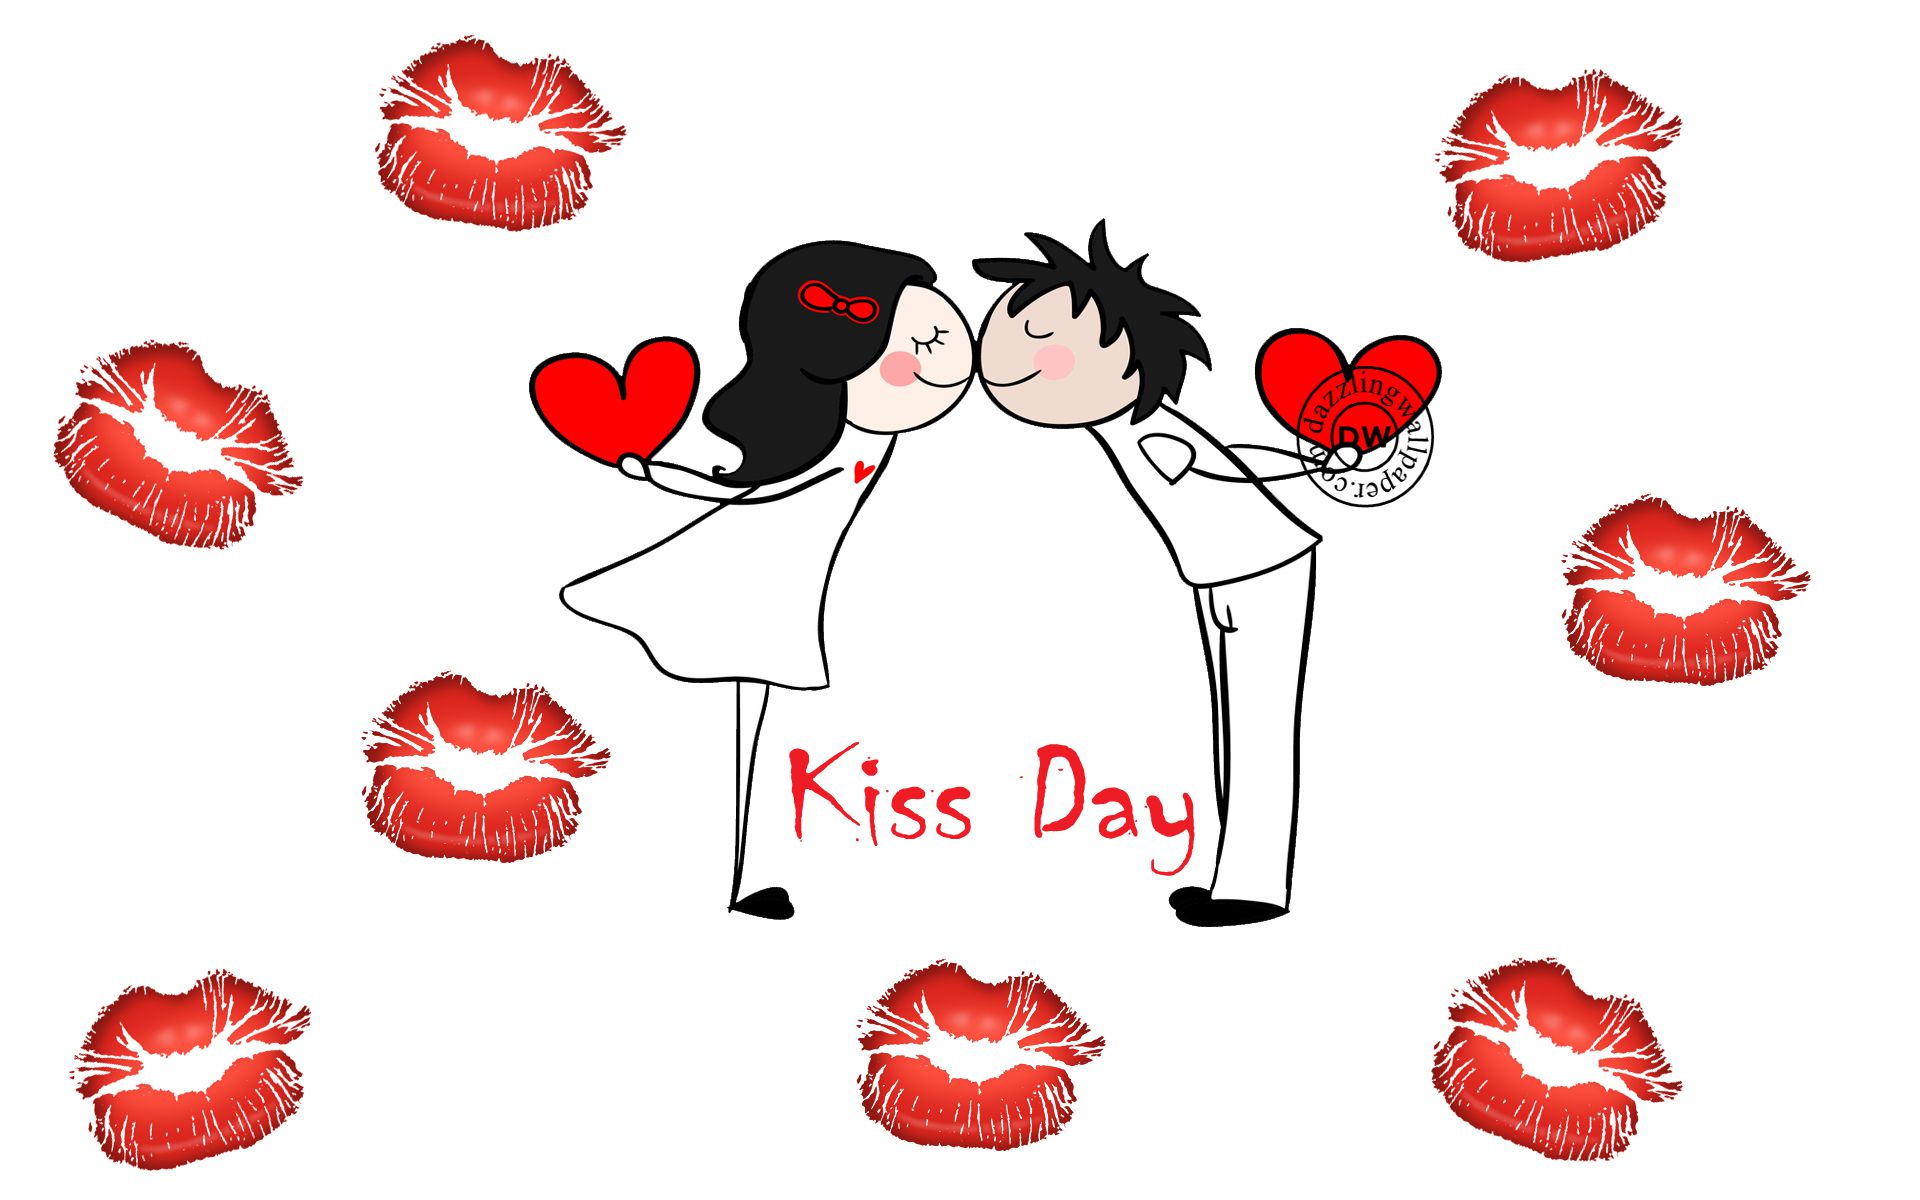 Download Kiss Wallpaper, Kiss Day E-Greetings, Friendship Ecards, Happy Kiss Day, Kiss Day, Kiss Day 2015, Kiss Day wishes sms, Kiss Day – 13 February, Love Kiss Ecards, Send Kiss Day